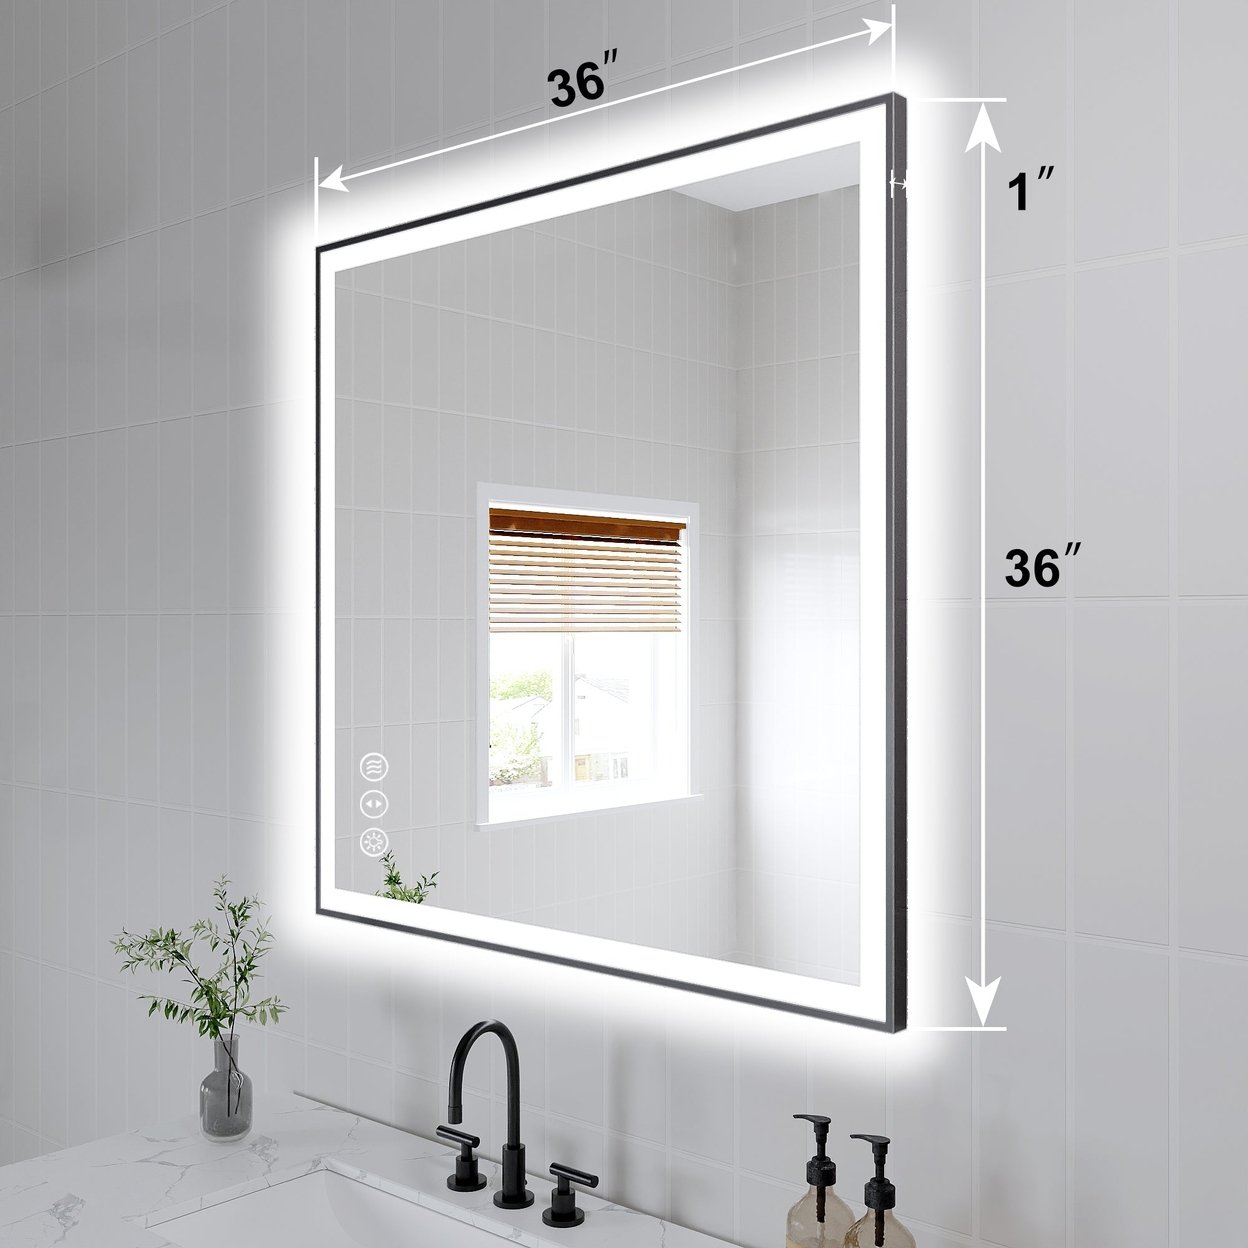 Apex-Noir 36x36 Framed LED Lighted Bathroom Mirror